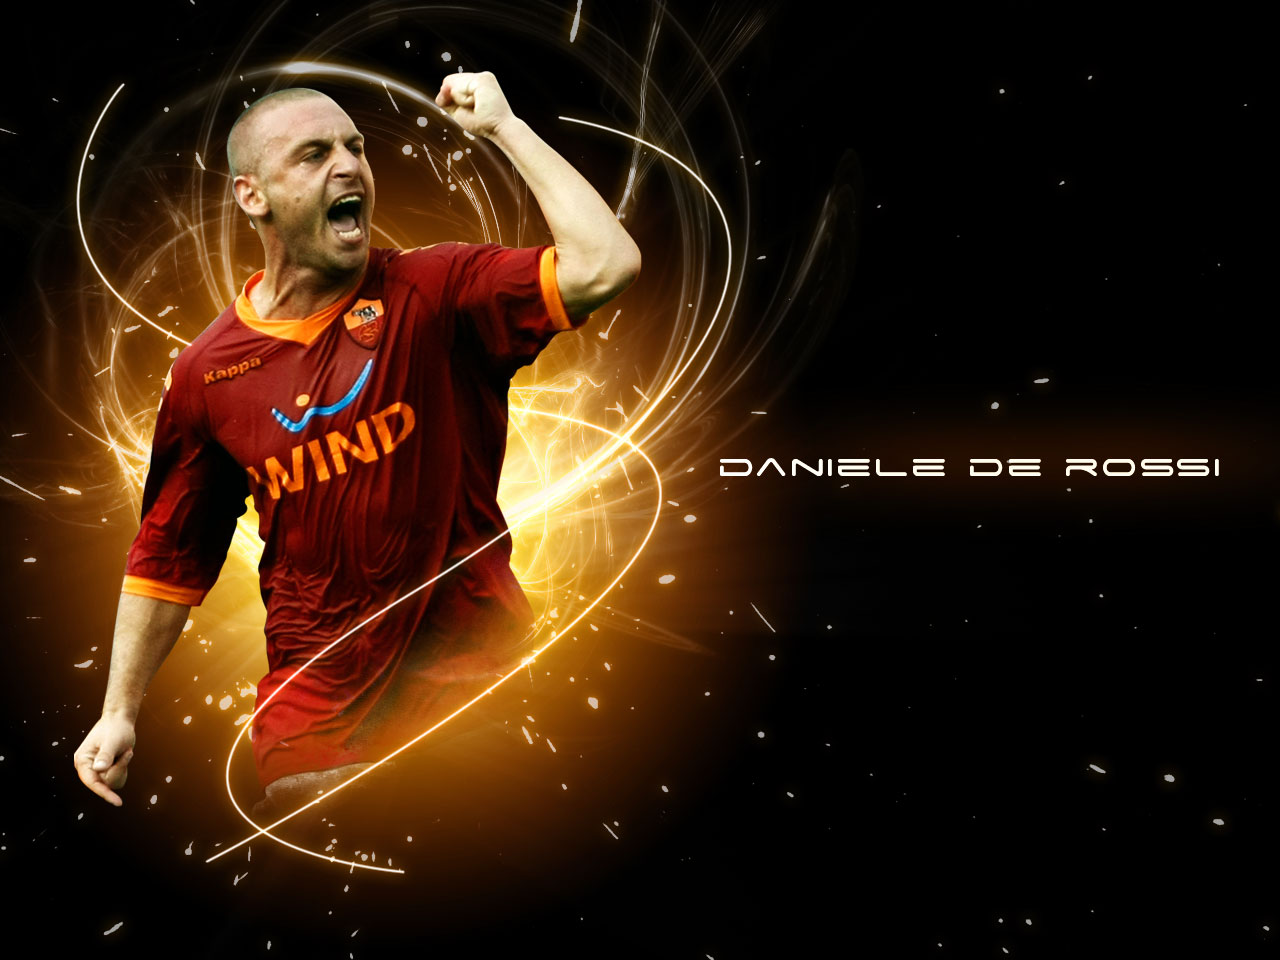 Football Player's Biography 7: Daniele De Rossi